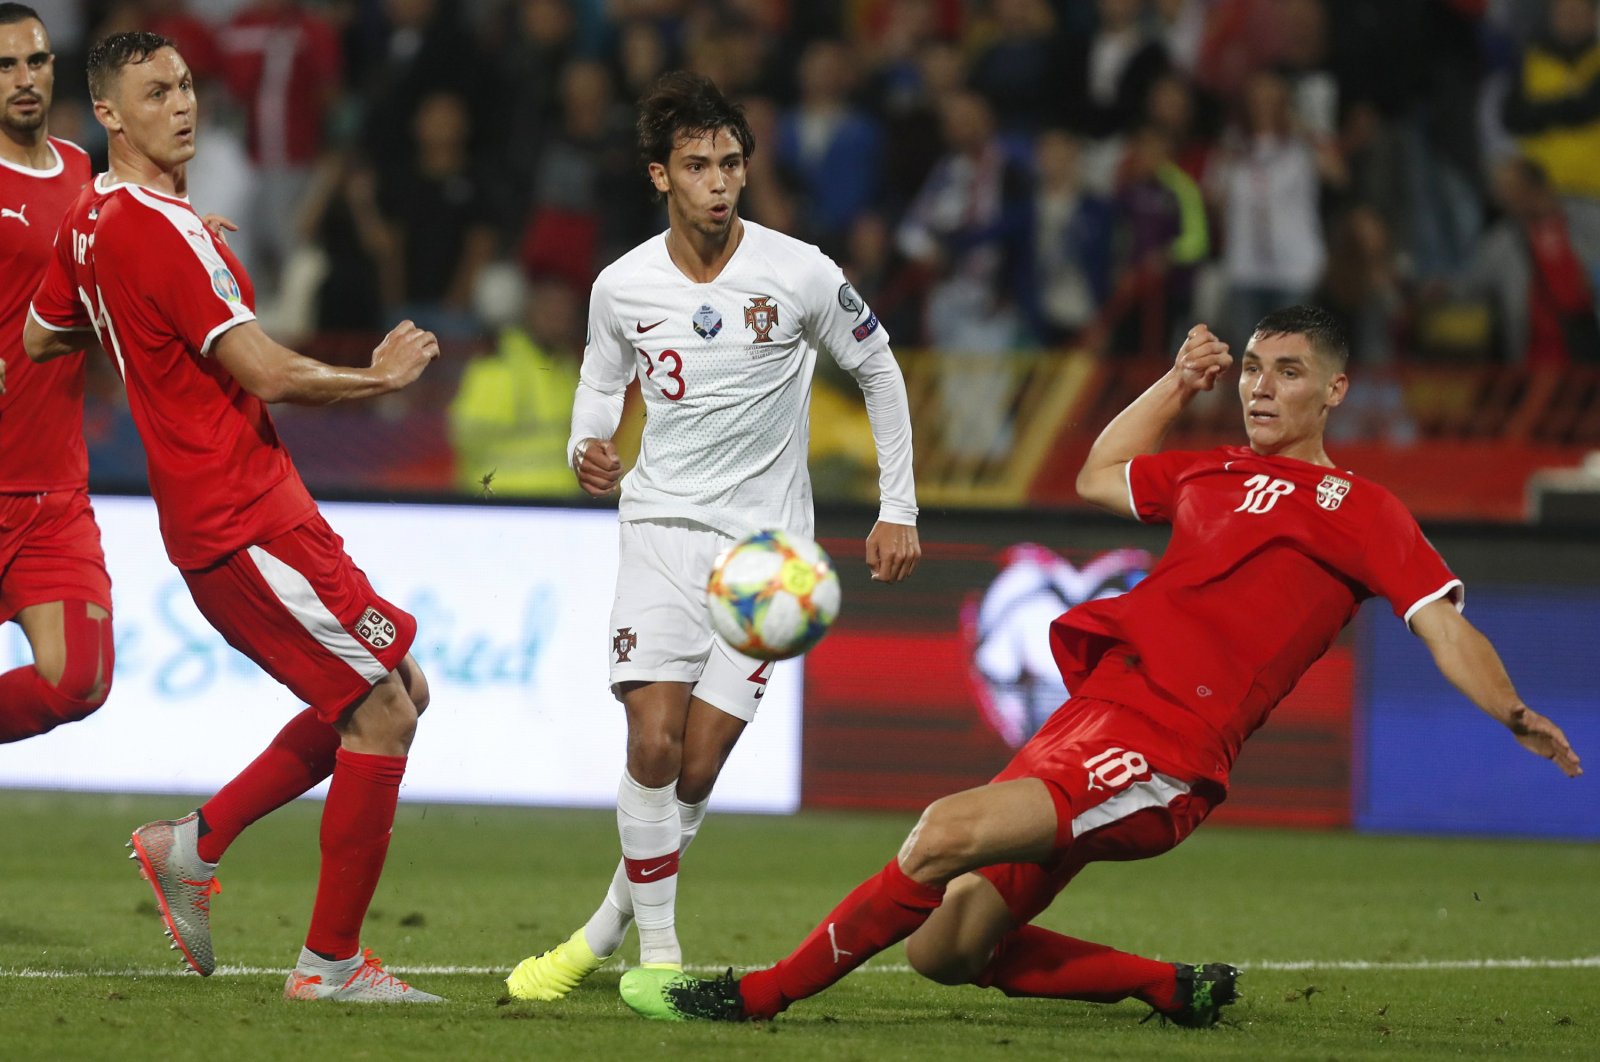 Portugal's Joao Felix, center, kicks the ball ahead of Serbia's Nemanja Matic, left, and Serbia's Nikola Milenkovic during the Euro 2020 group B qualifying match between in Belgrade, Serbia, Sept. 7, 2019. (AP Photo)